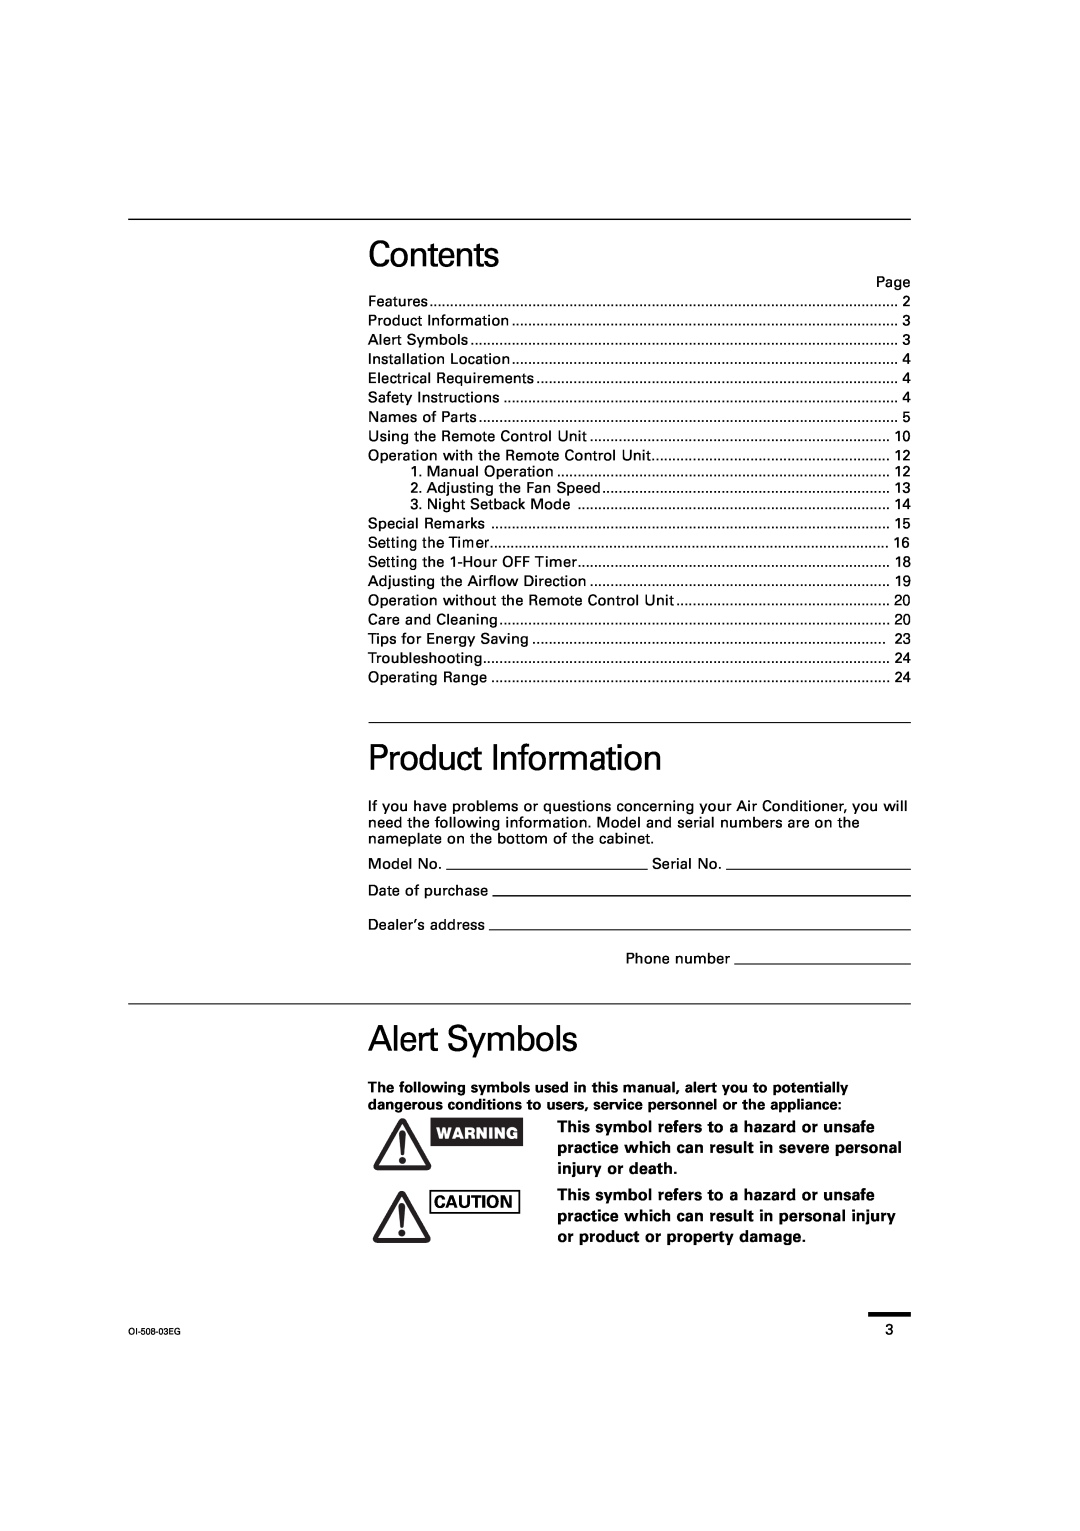 Sanyo KS2462R instruction manual Contents, Product Information, Alert Symbols 